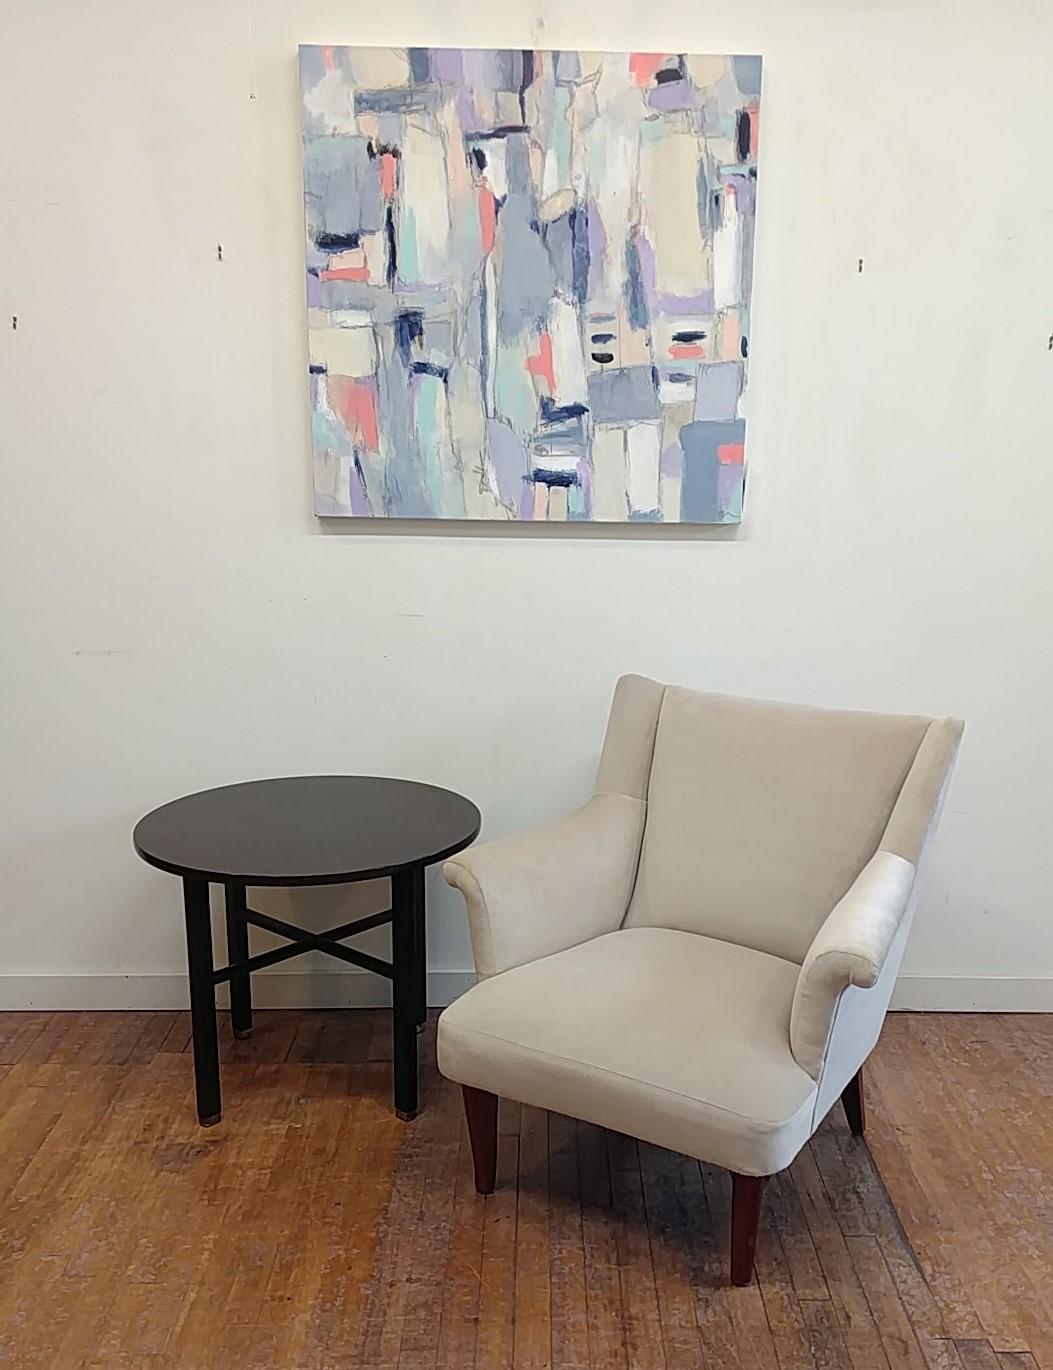 Velvet Edward Wormley Lounge Chair #4796 for Dunbar For Sale